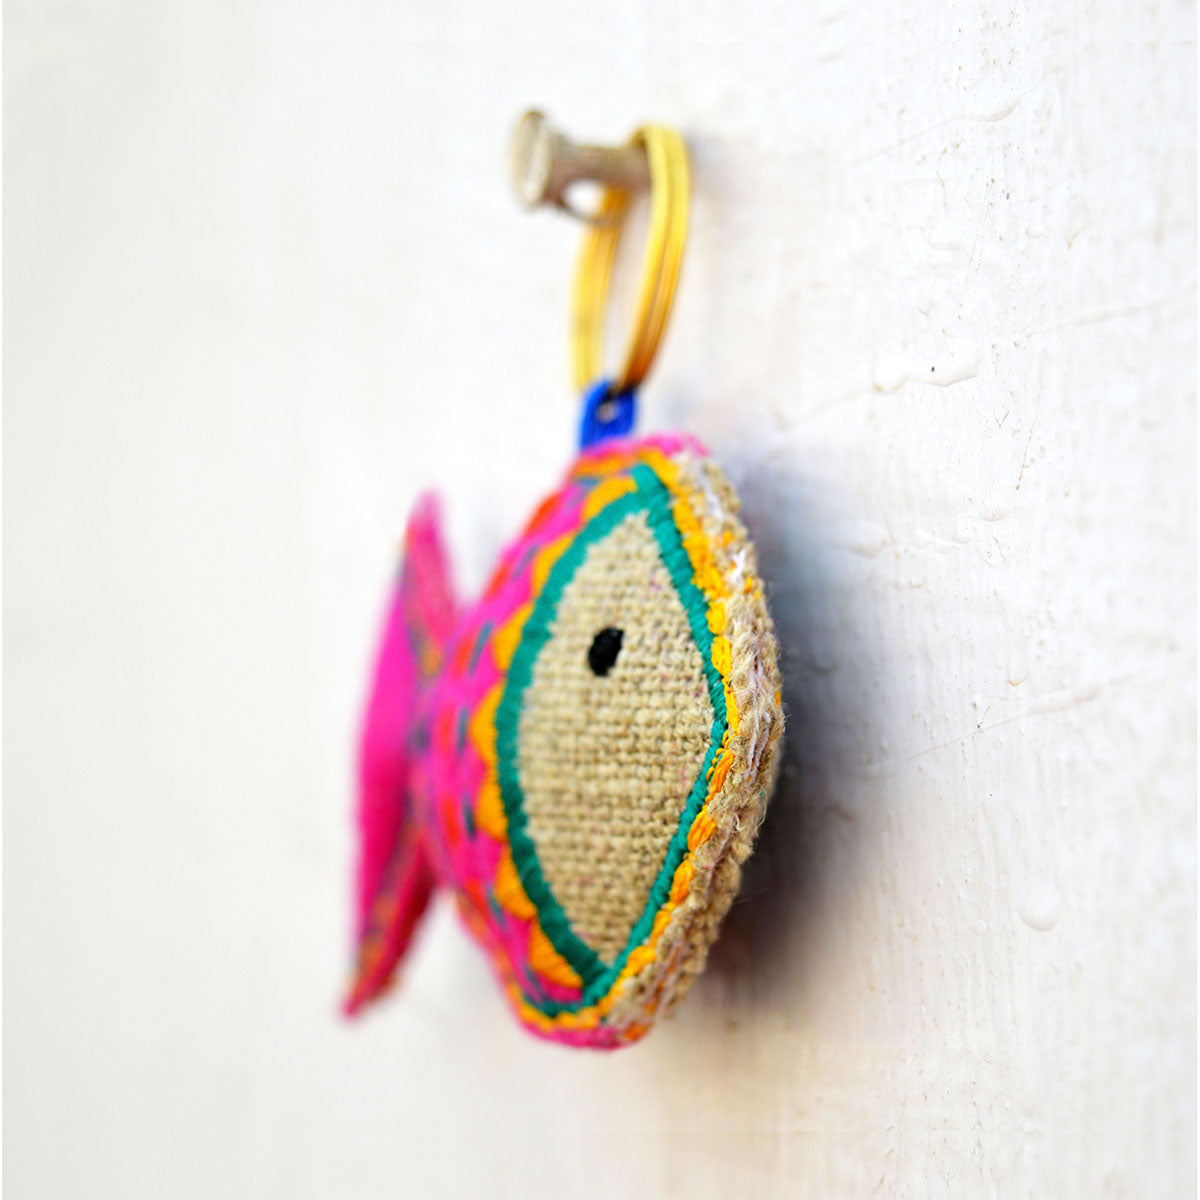 Multicolor fish key ring, tassel, handmade, boho bag charm, size 3 inches or 13 cms